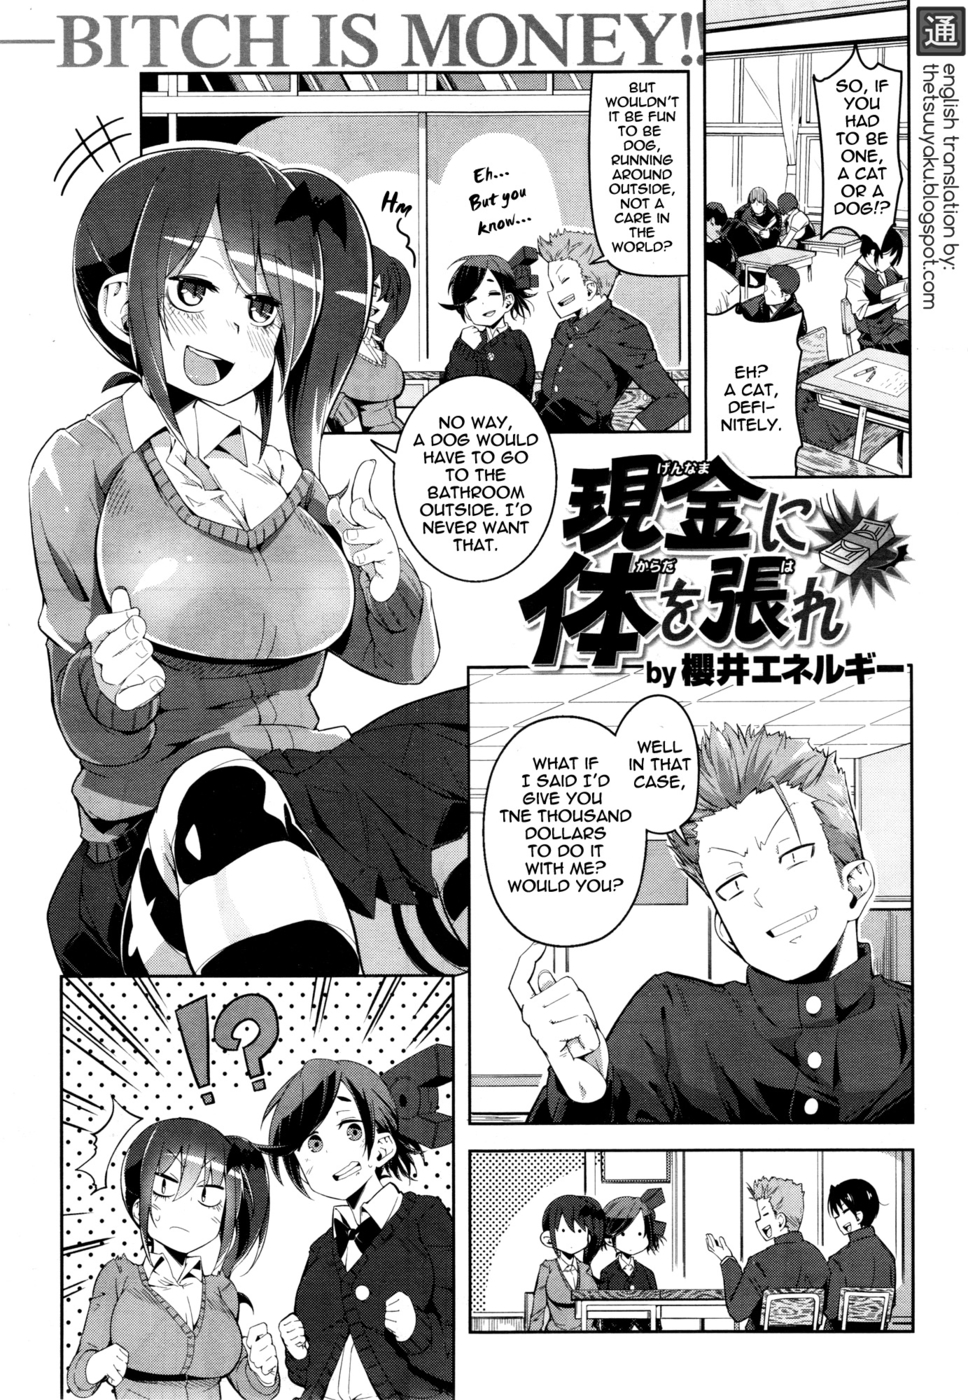 Hentai Manga Comic-Do It All for Cash-Bitch Is Money !-1